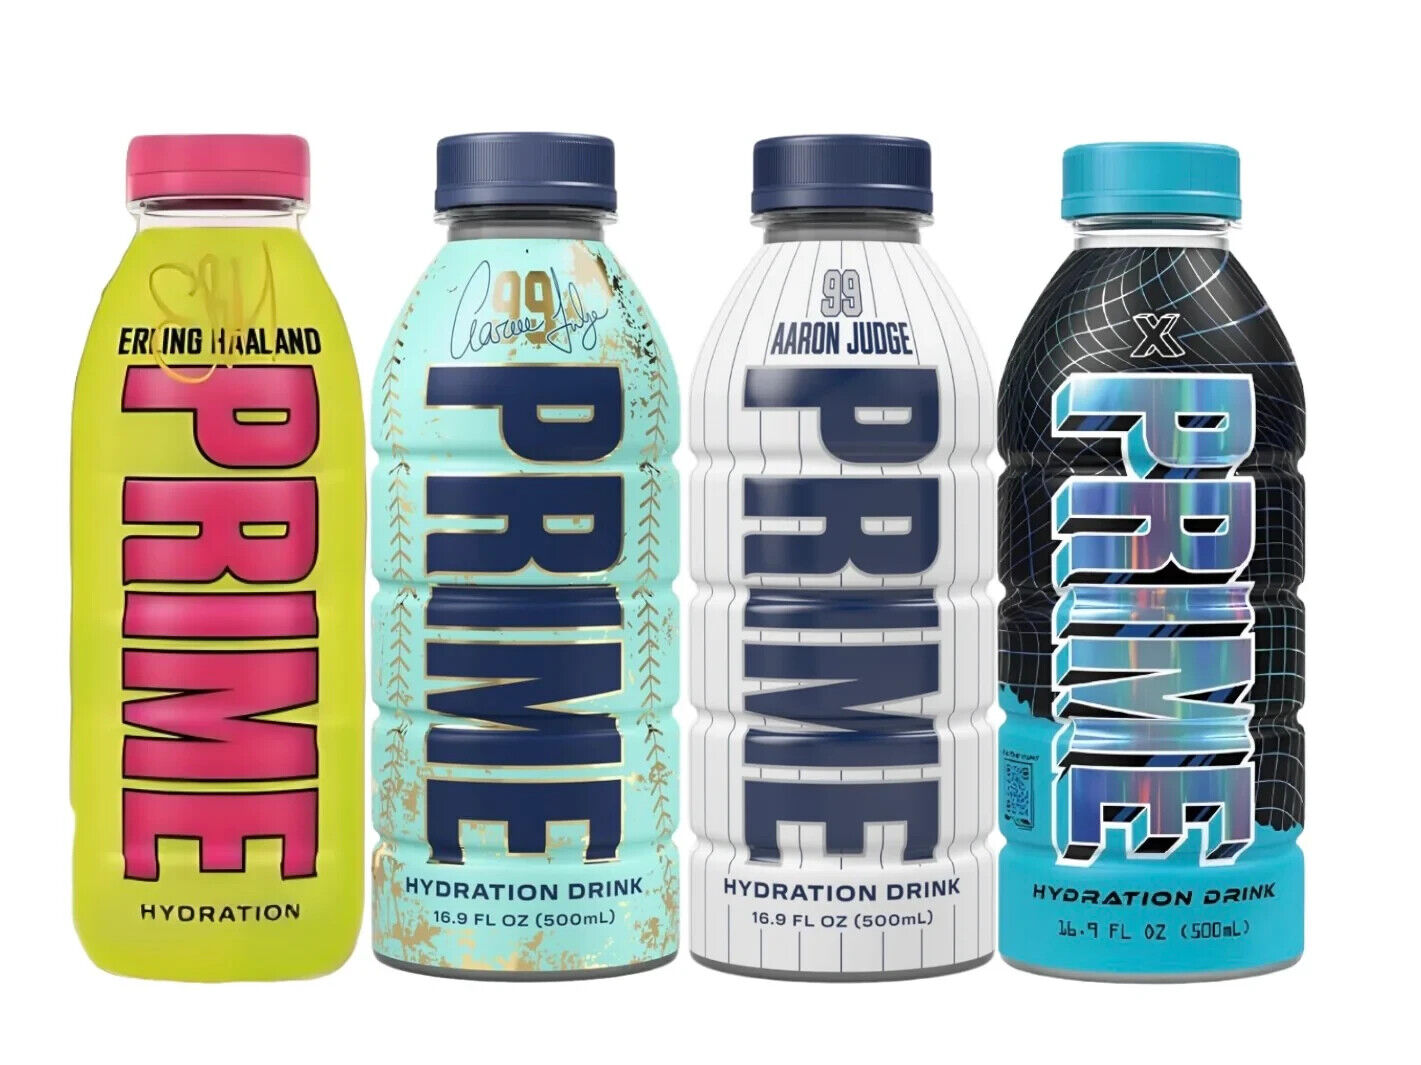 Prime Hydration X, Erling Haaland, Aaron Judge White & Blue Bottles PRE-Order